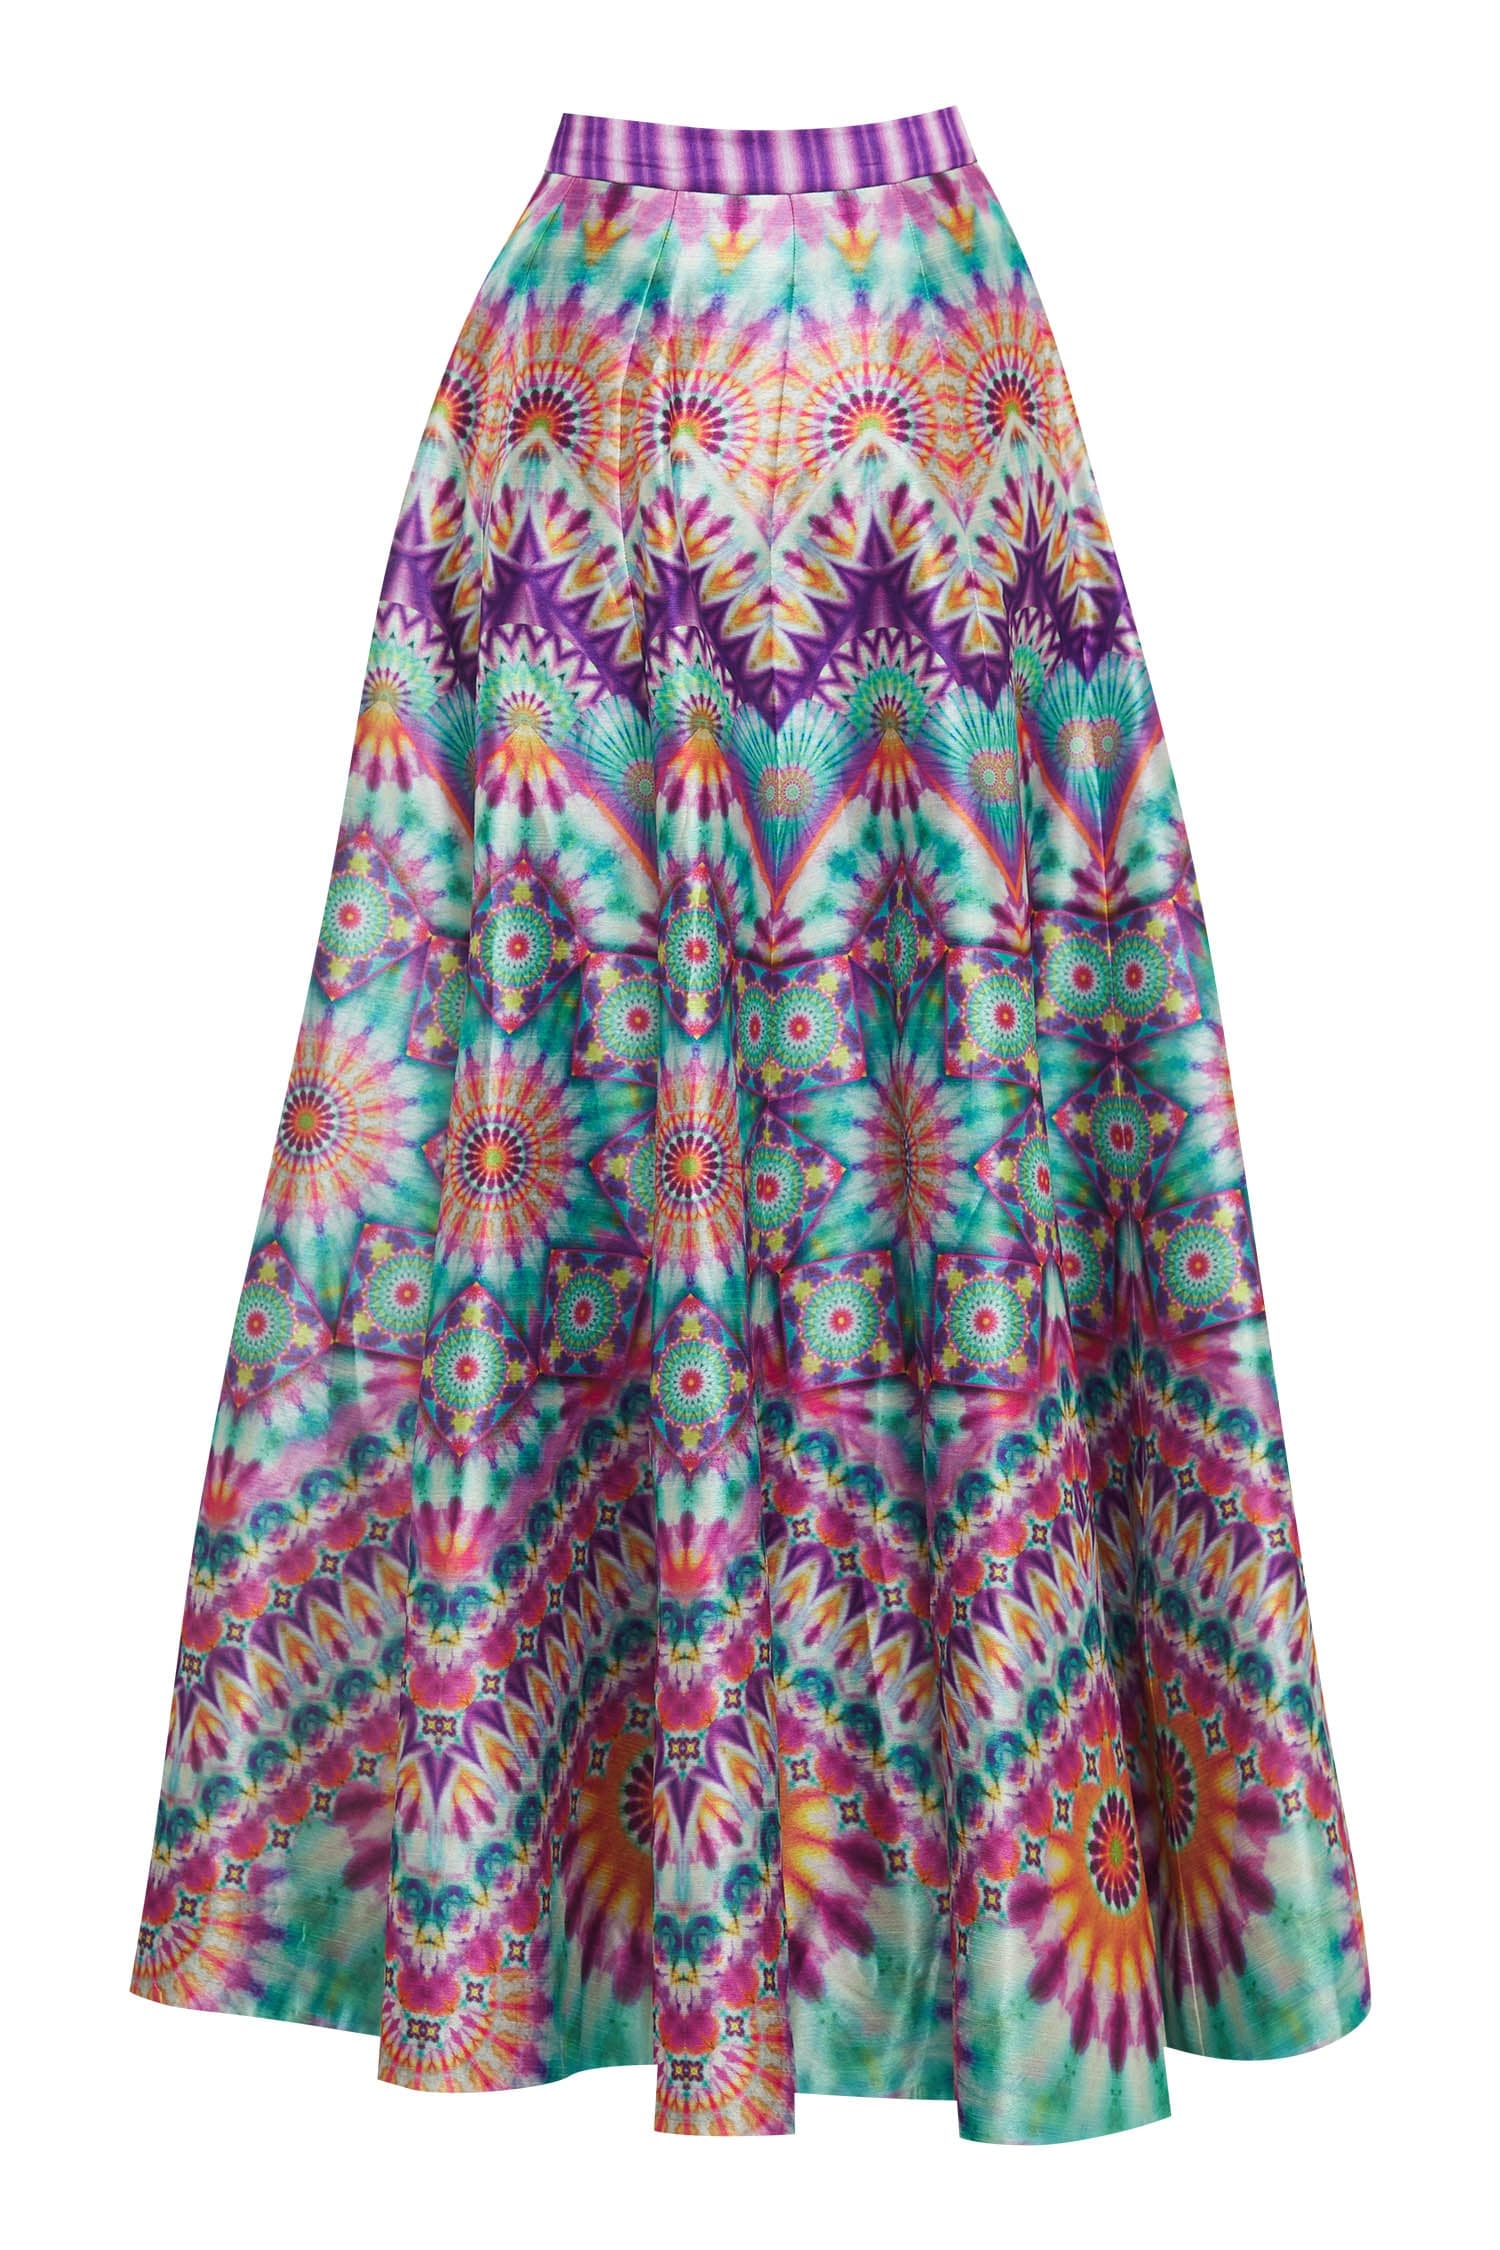 Buy Tie Dye Maxi Skirt by Siddhartha Bansal at Aza Fashions